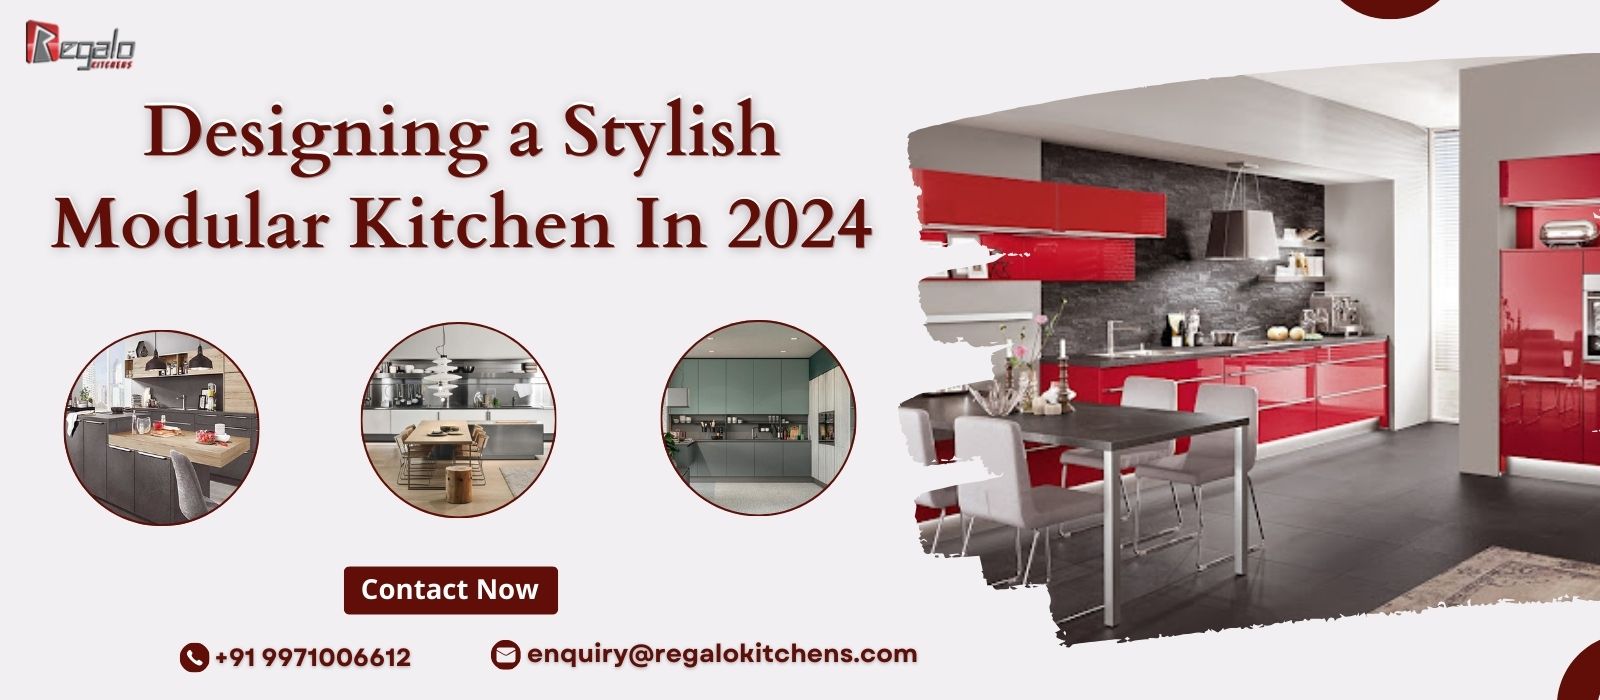 Designing a Stylish Modular Kitchen In 2024